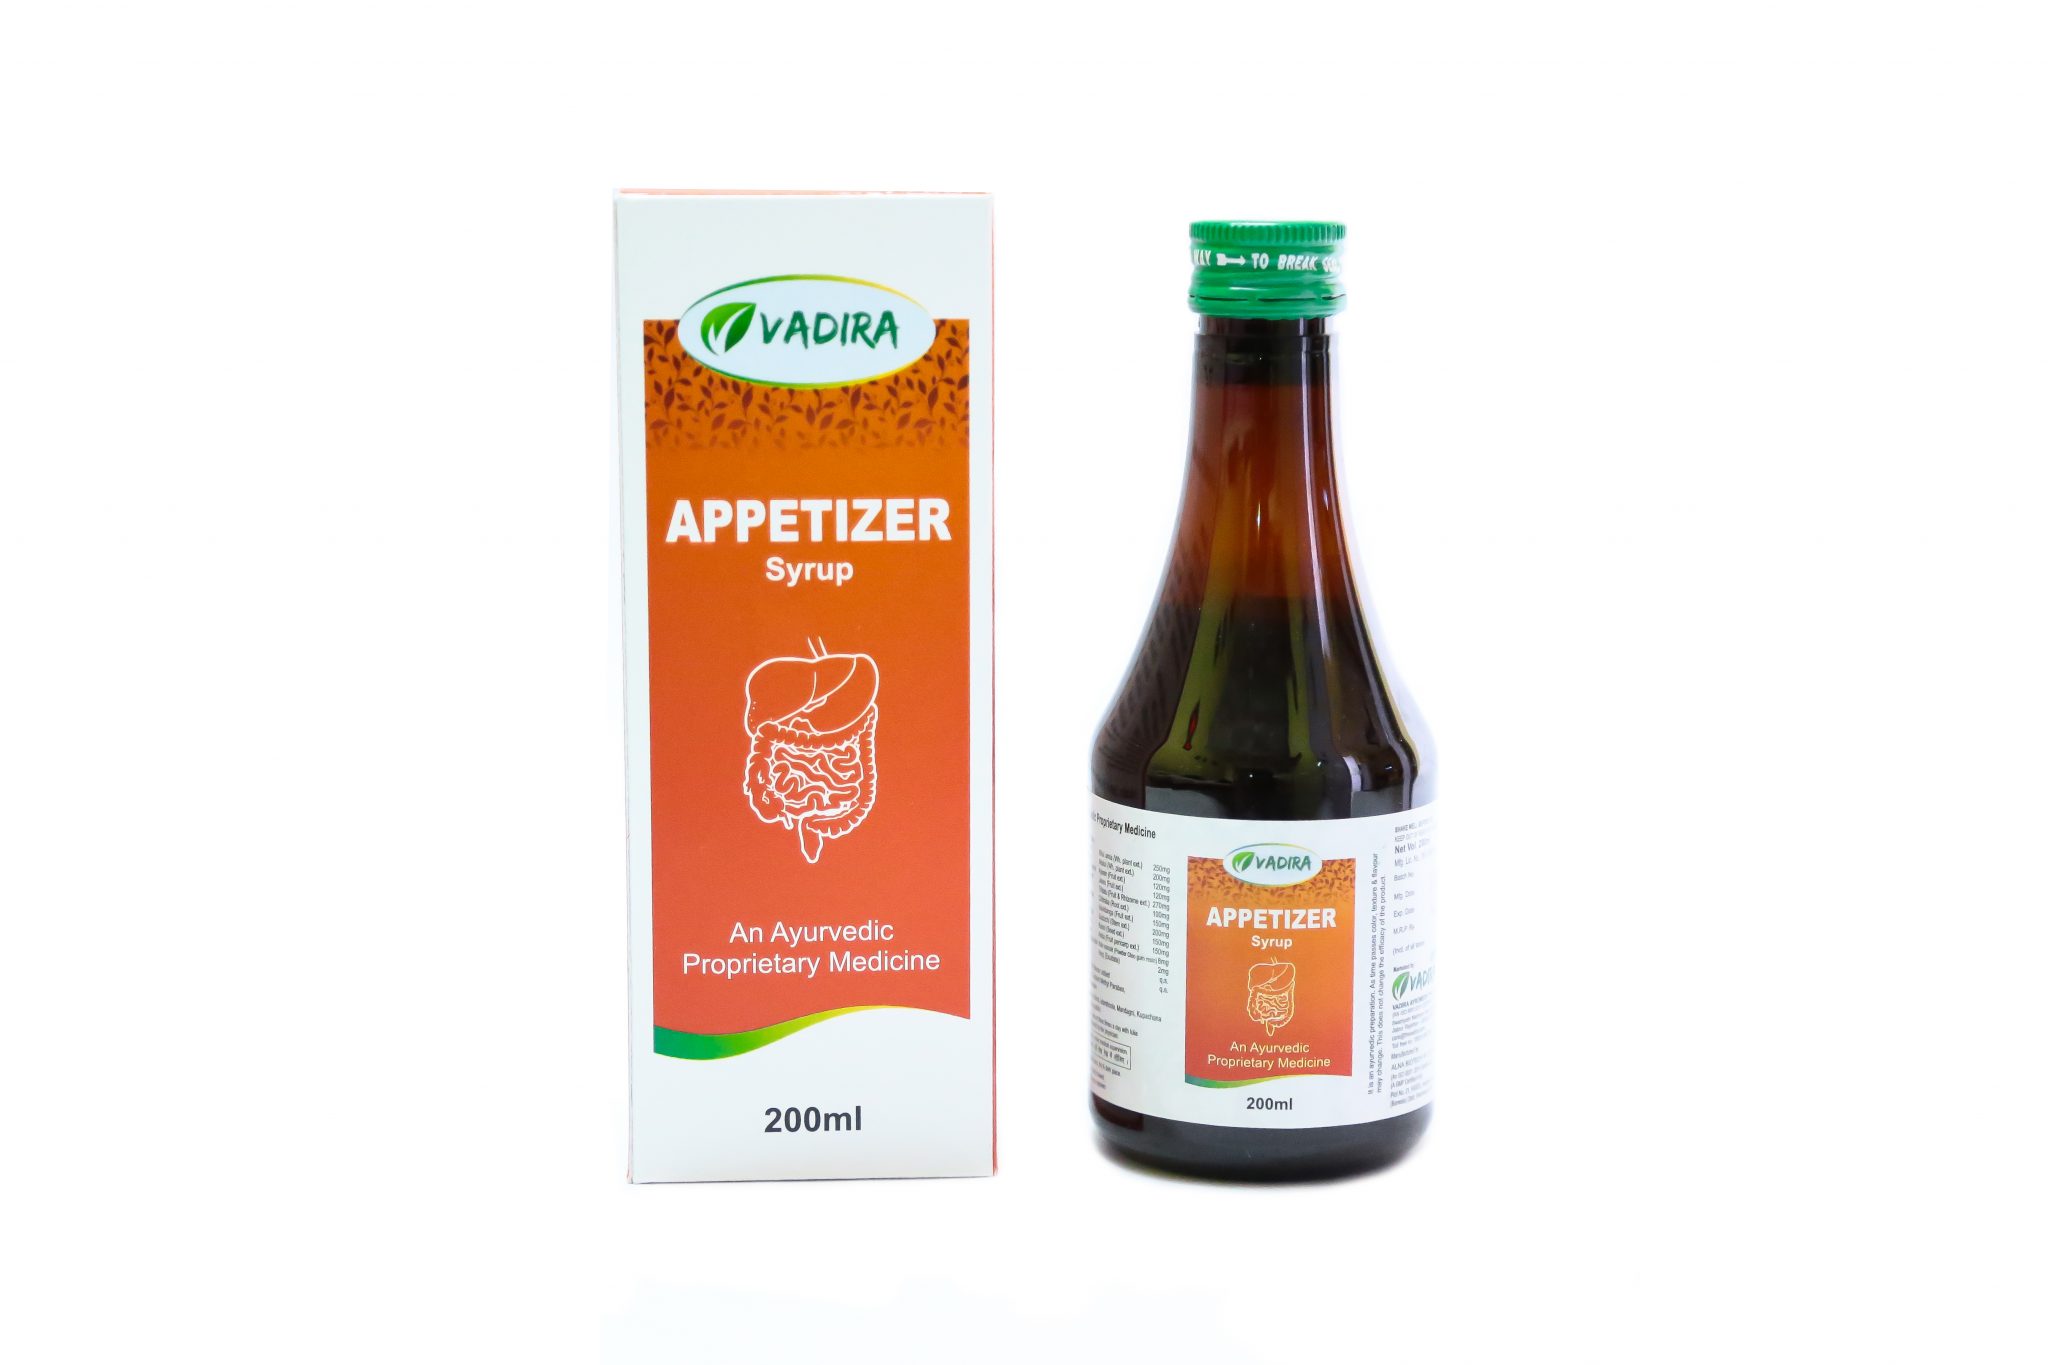 Vadira Appetizer Syrup